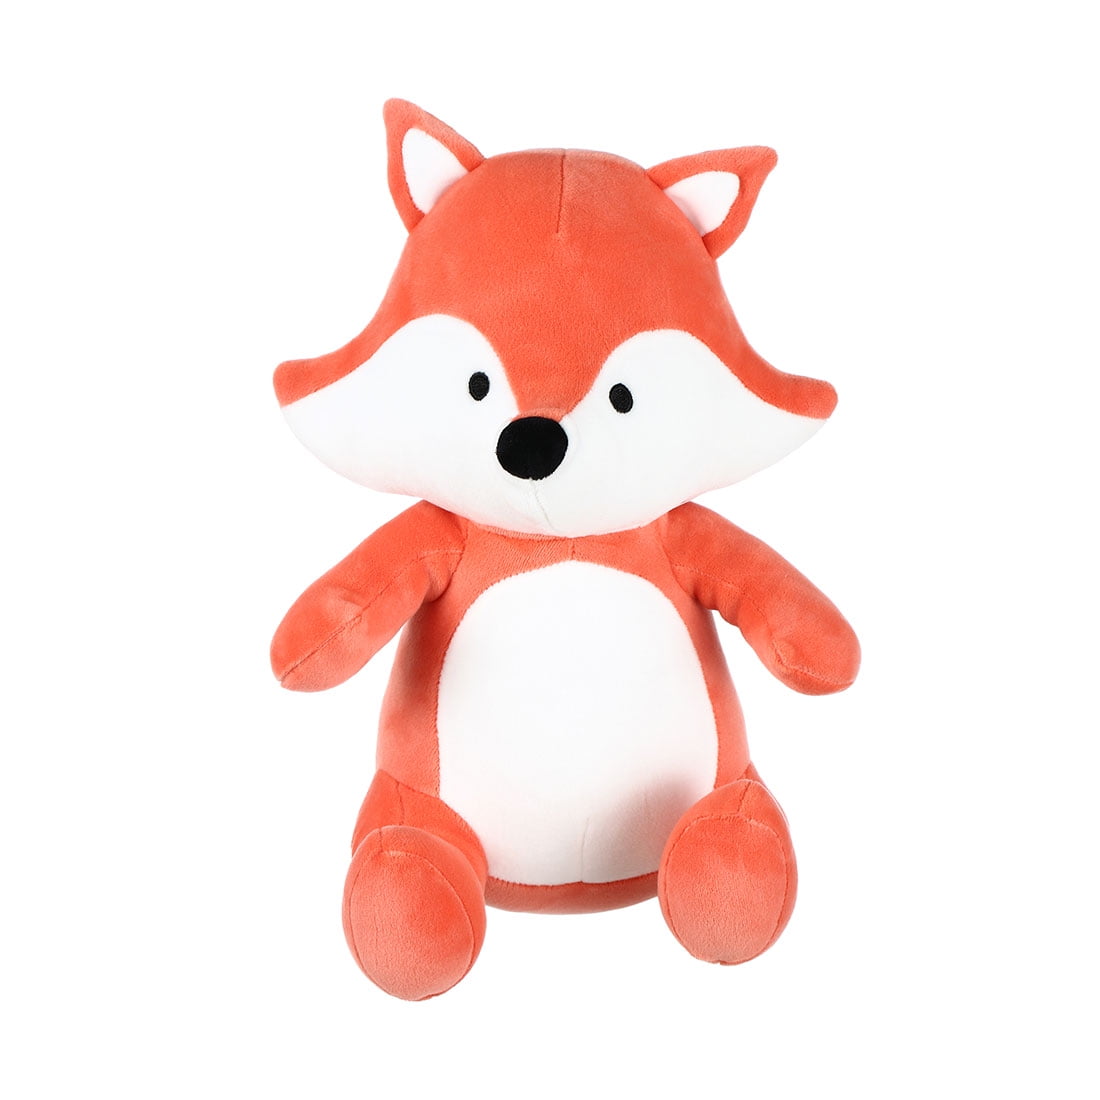 miniso fox plush